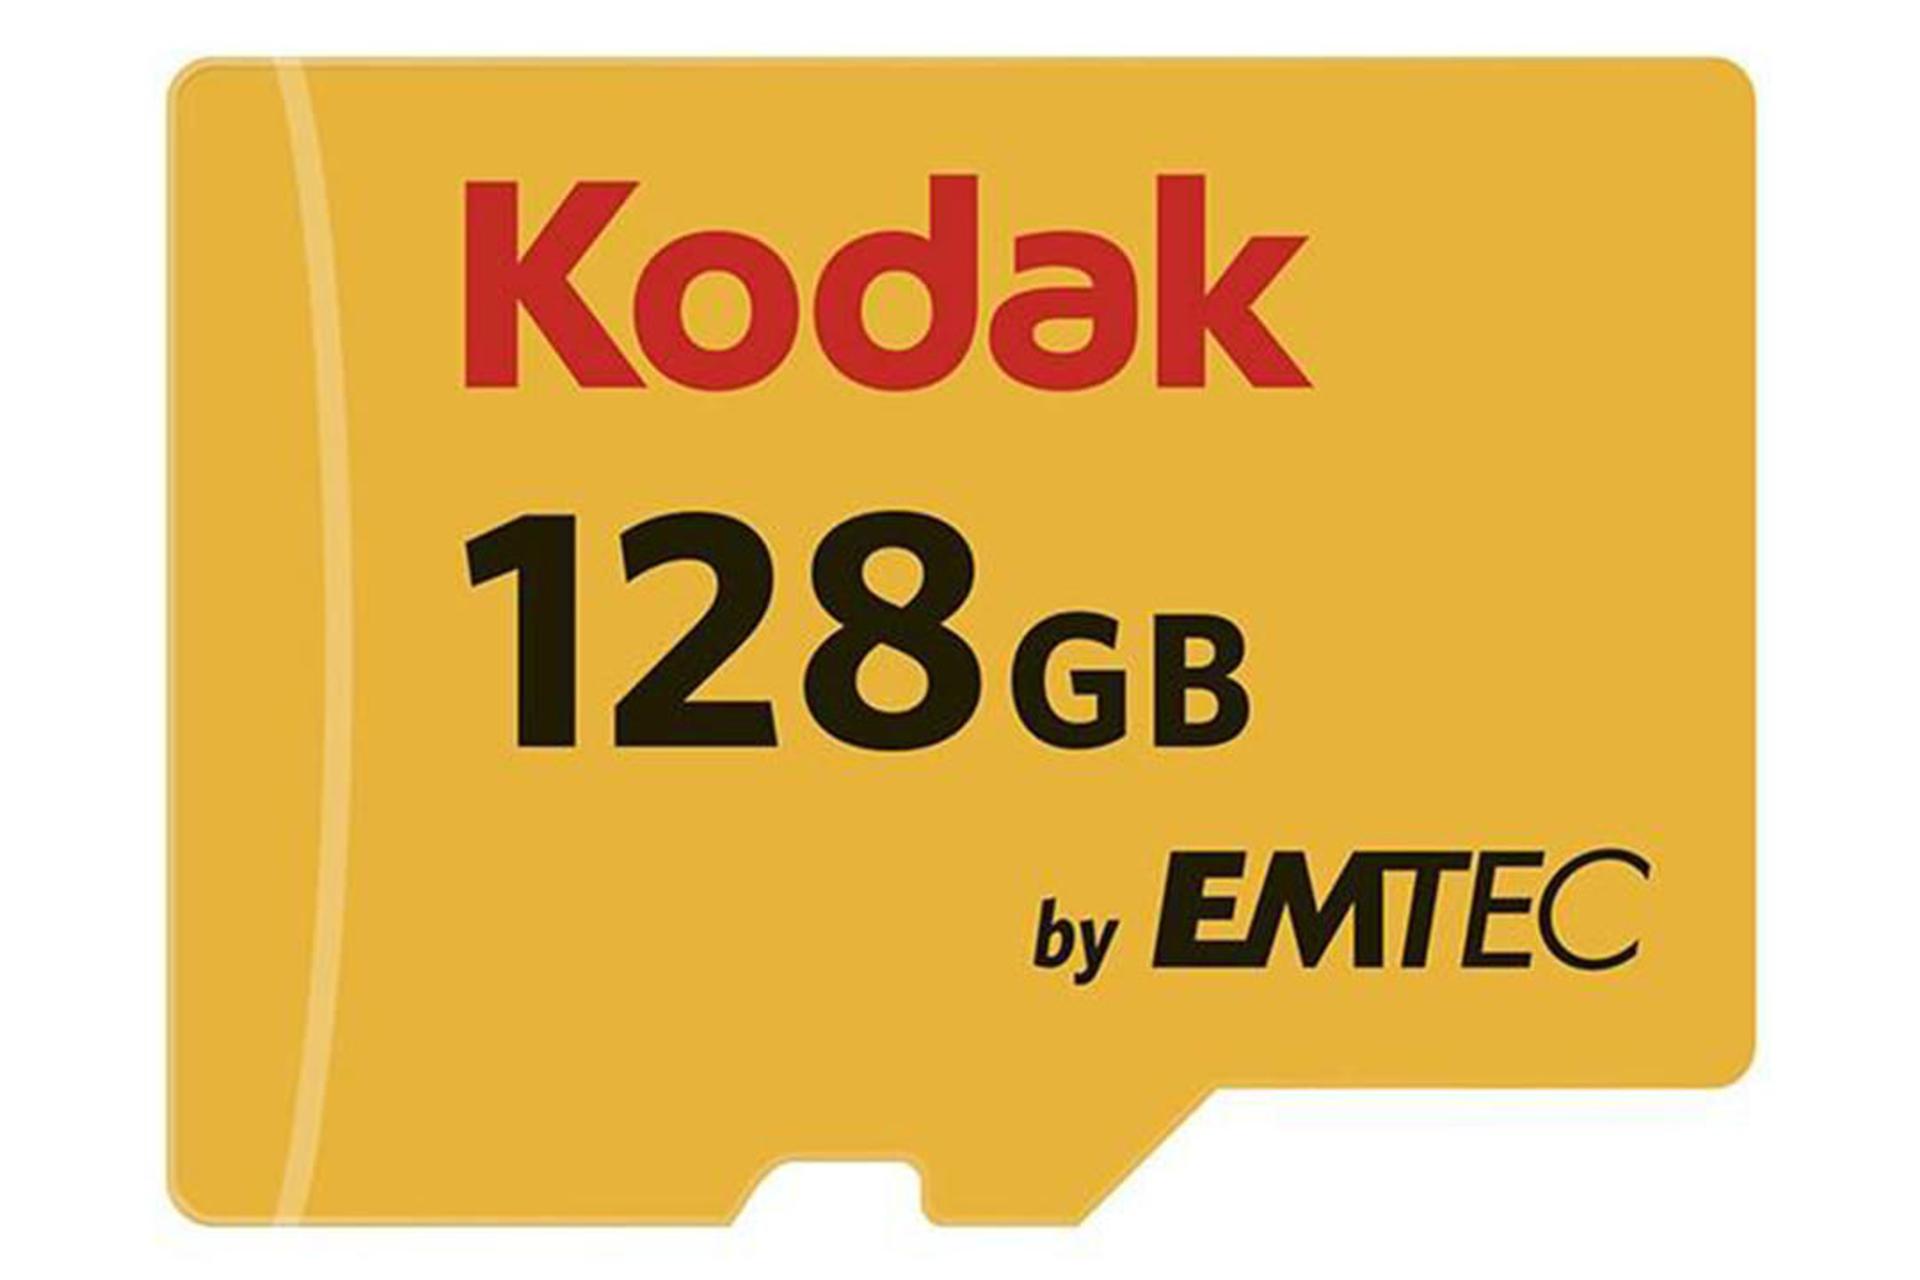 Kodak Emtec microSDXC Class 10 UHS-I U1 128GB